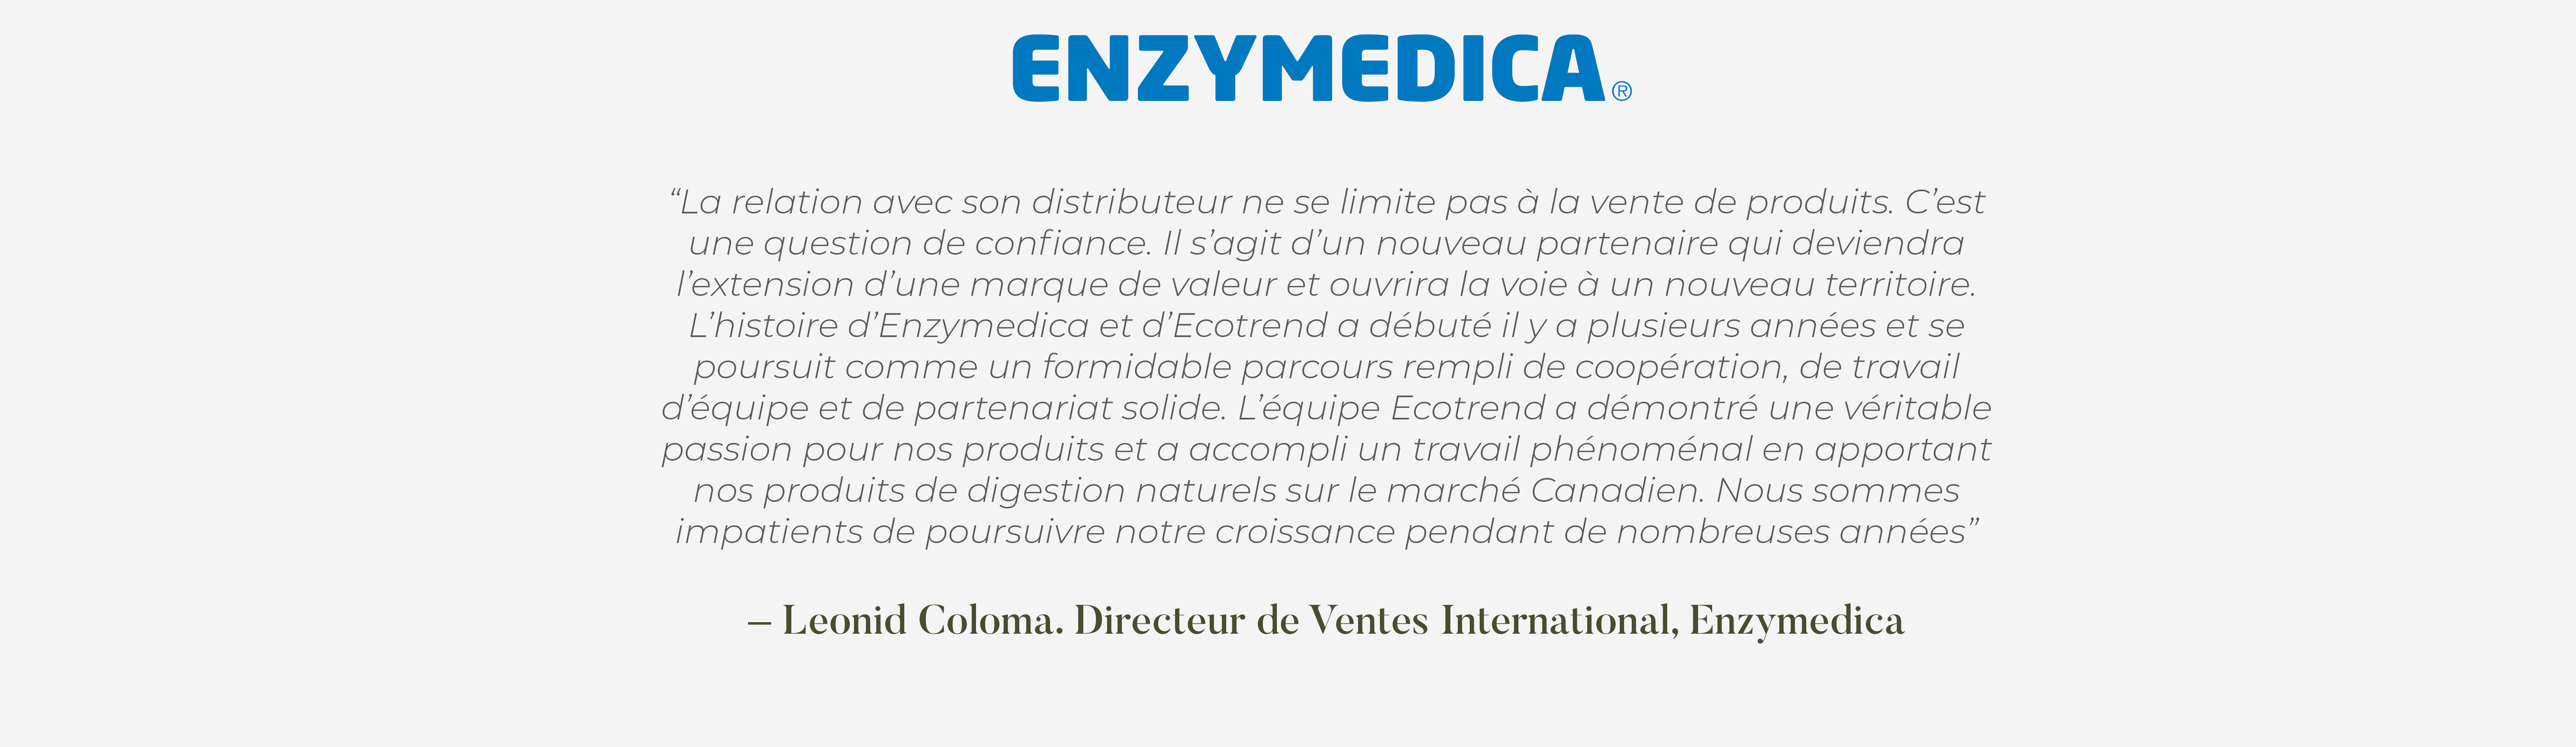 Leonid Coloma Director of international sales at Enzymedica testimonial